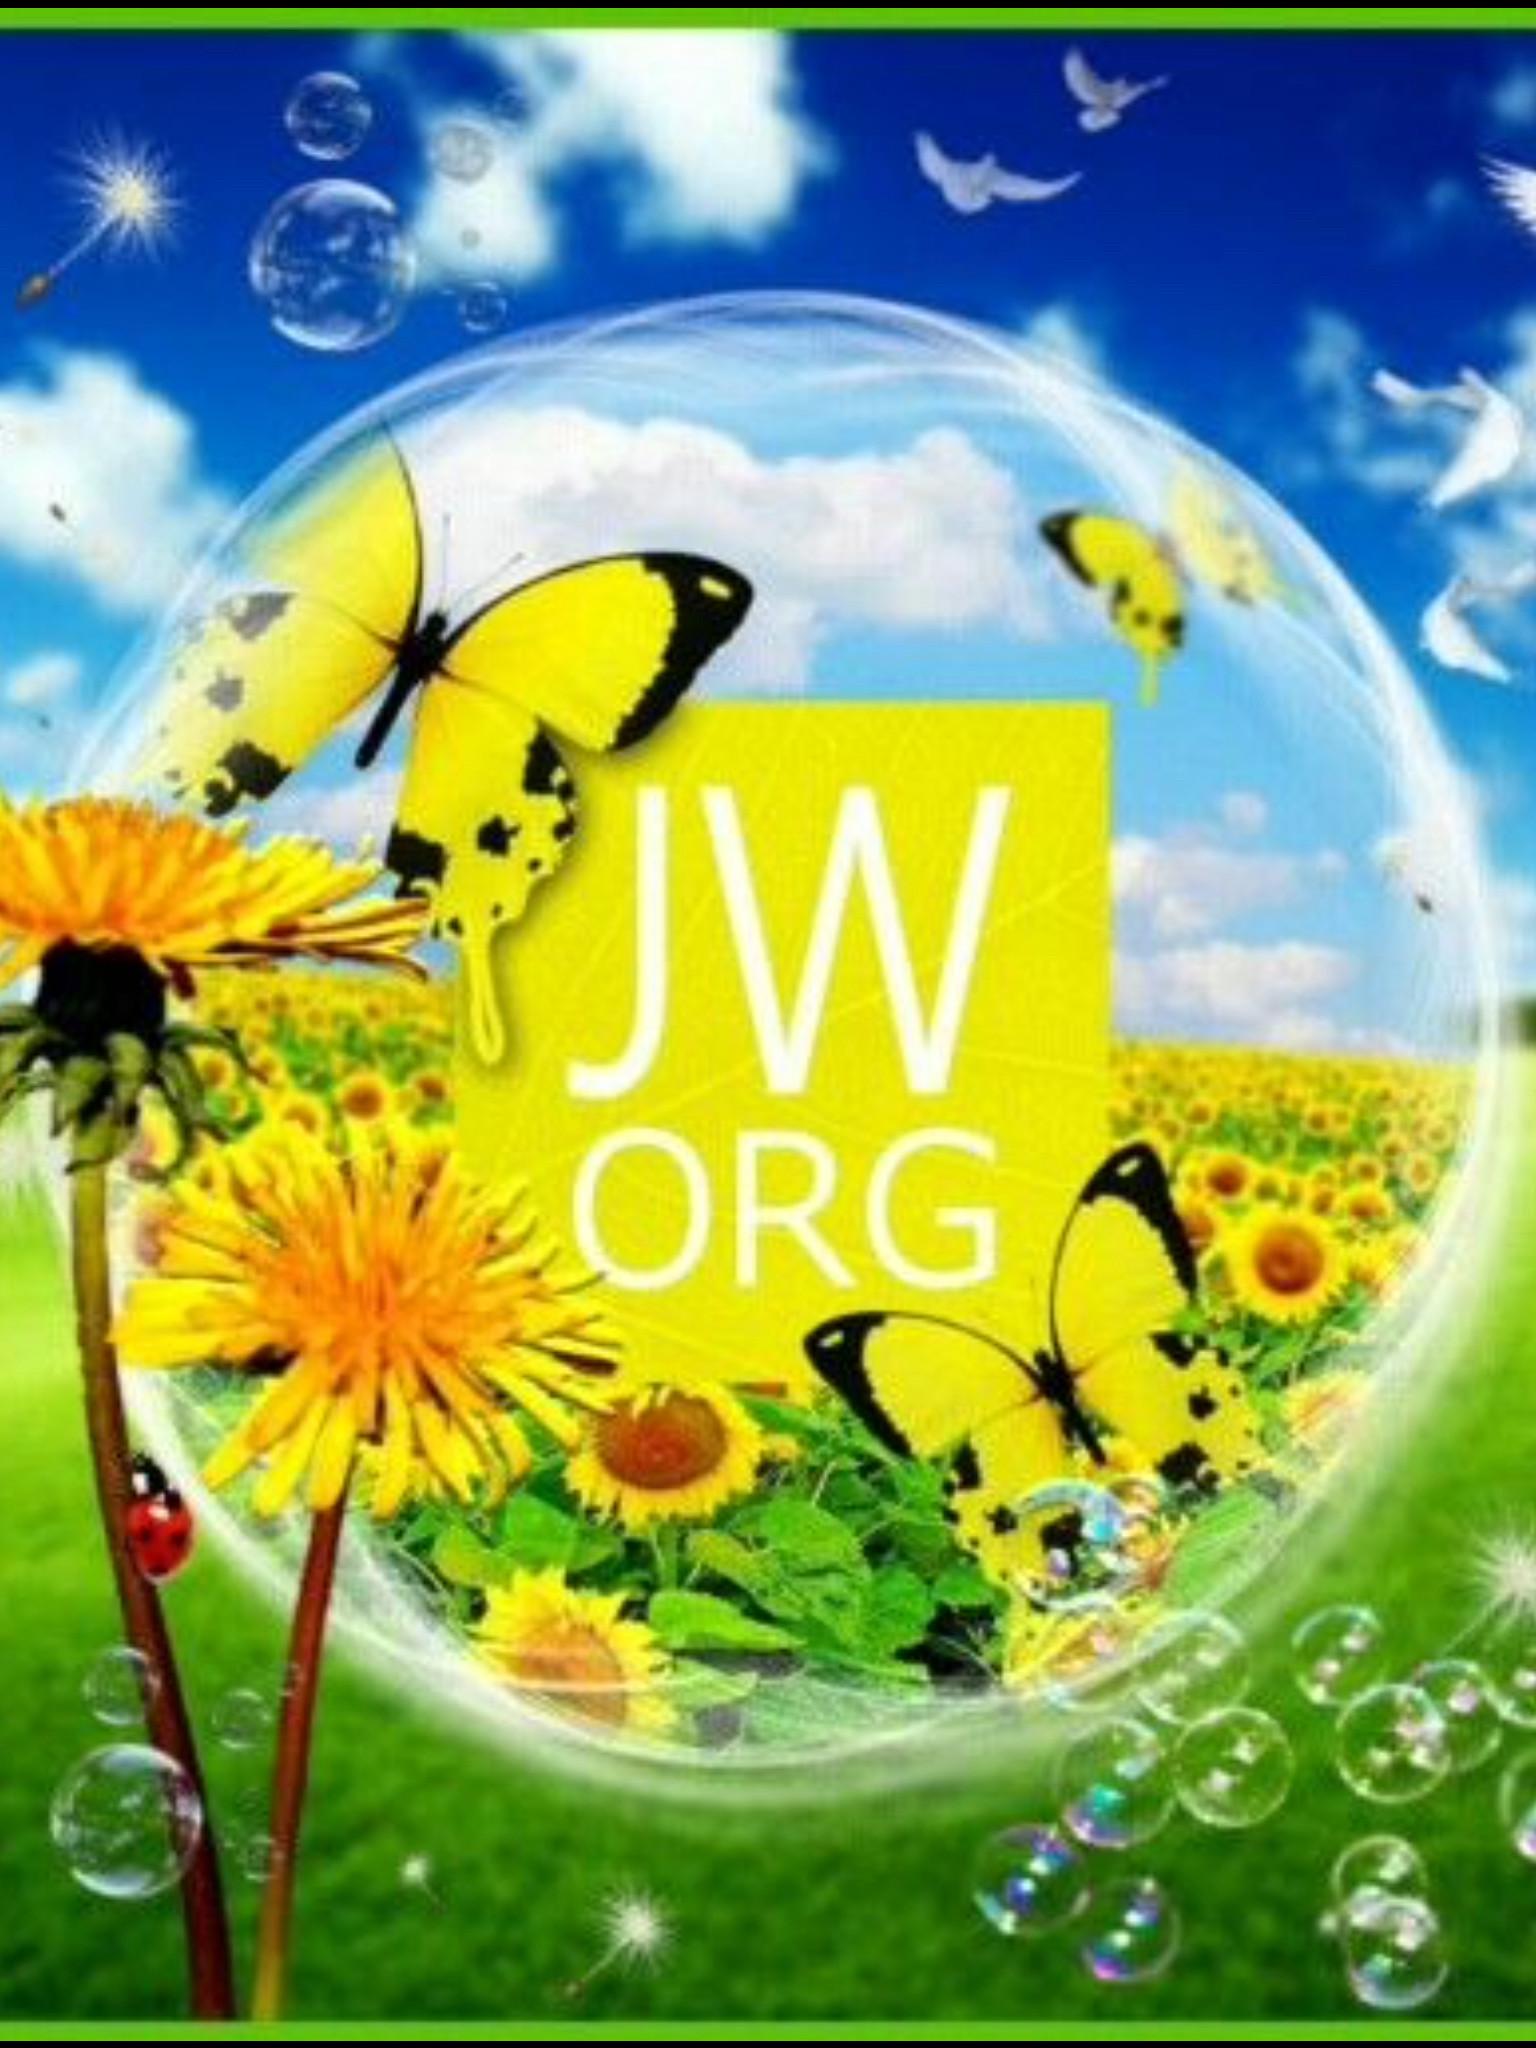 Https jw org. JW org. JW org Wallpaper. JW org5417.